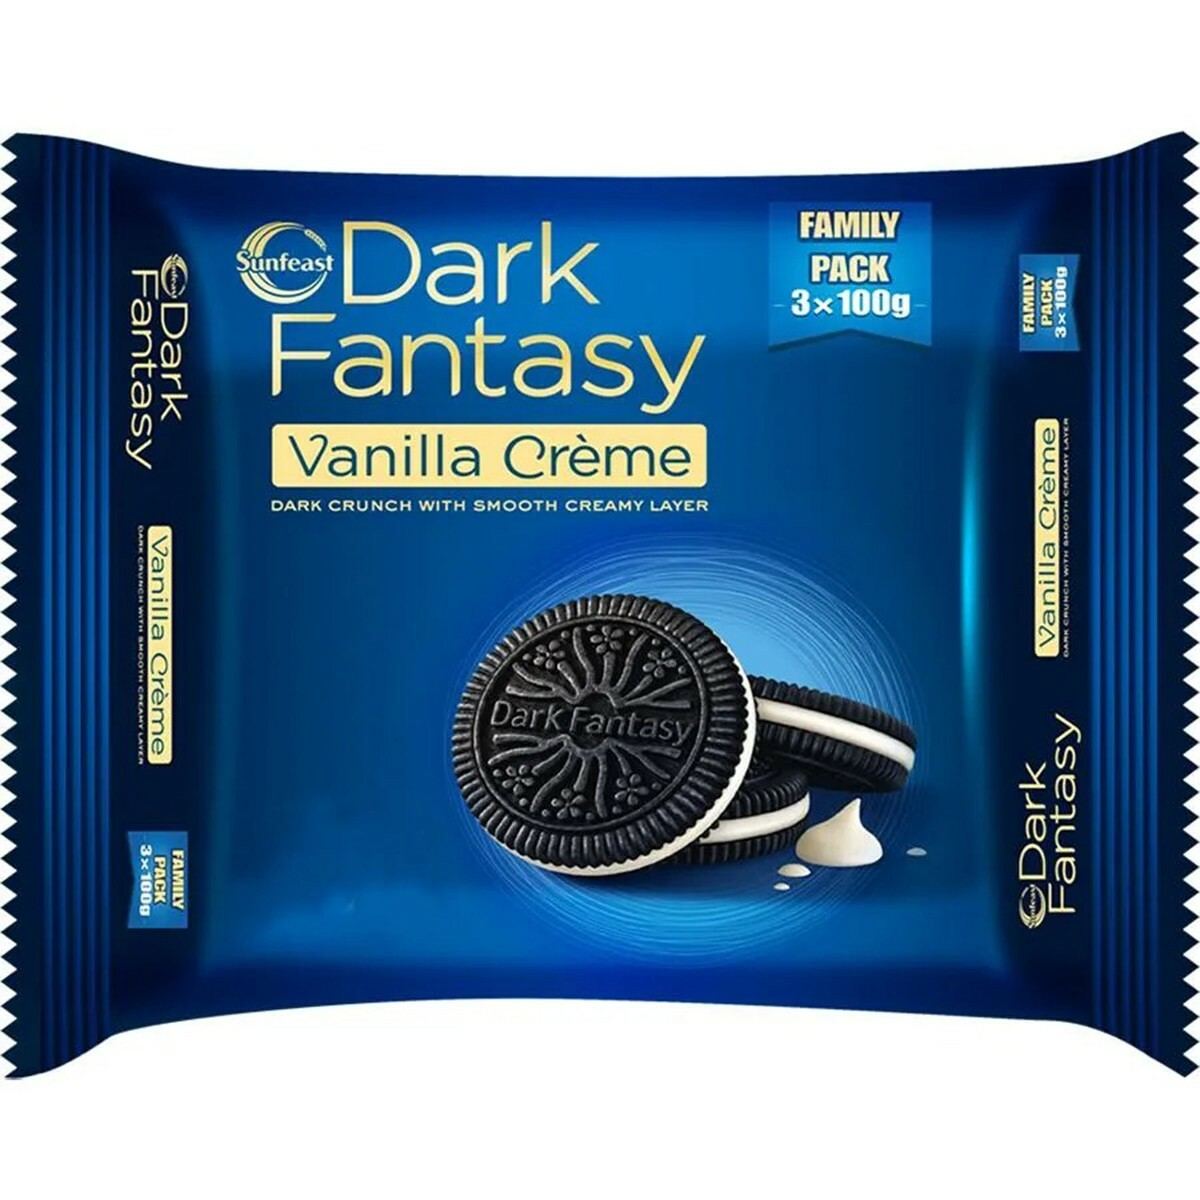 Sunfeast Dark Fantasy Vanilla Creme 300g